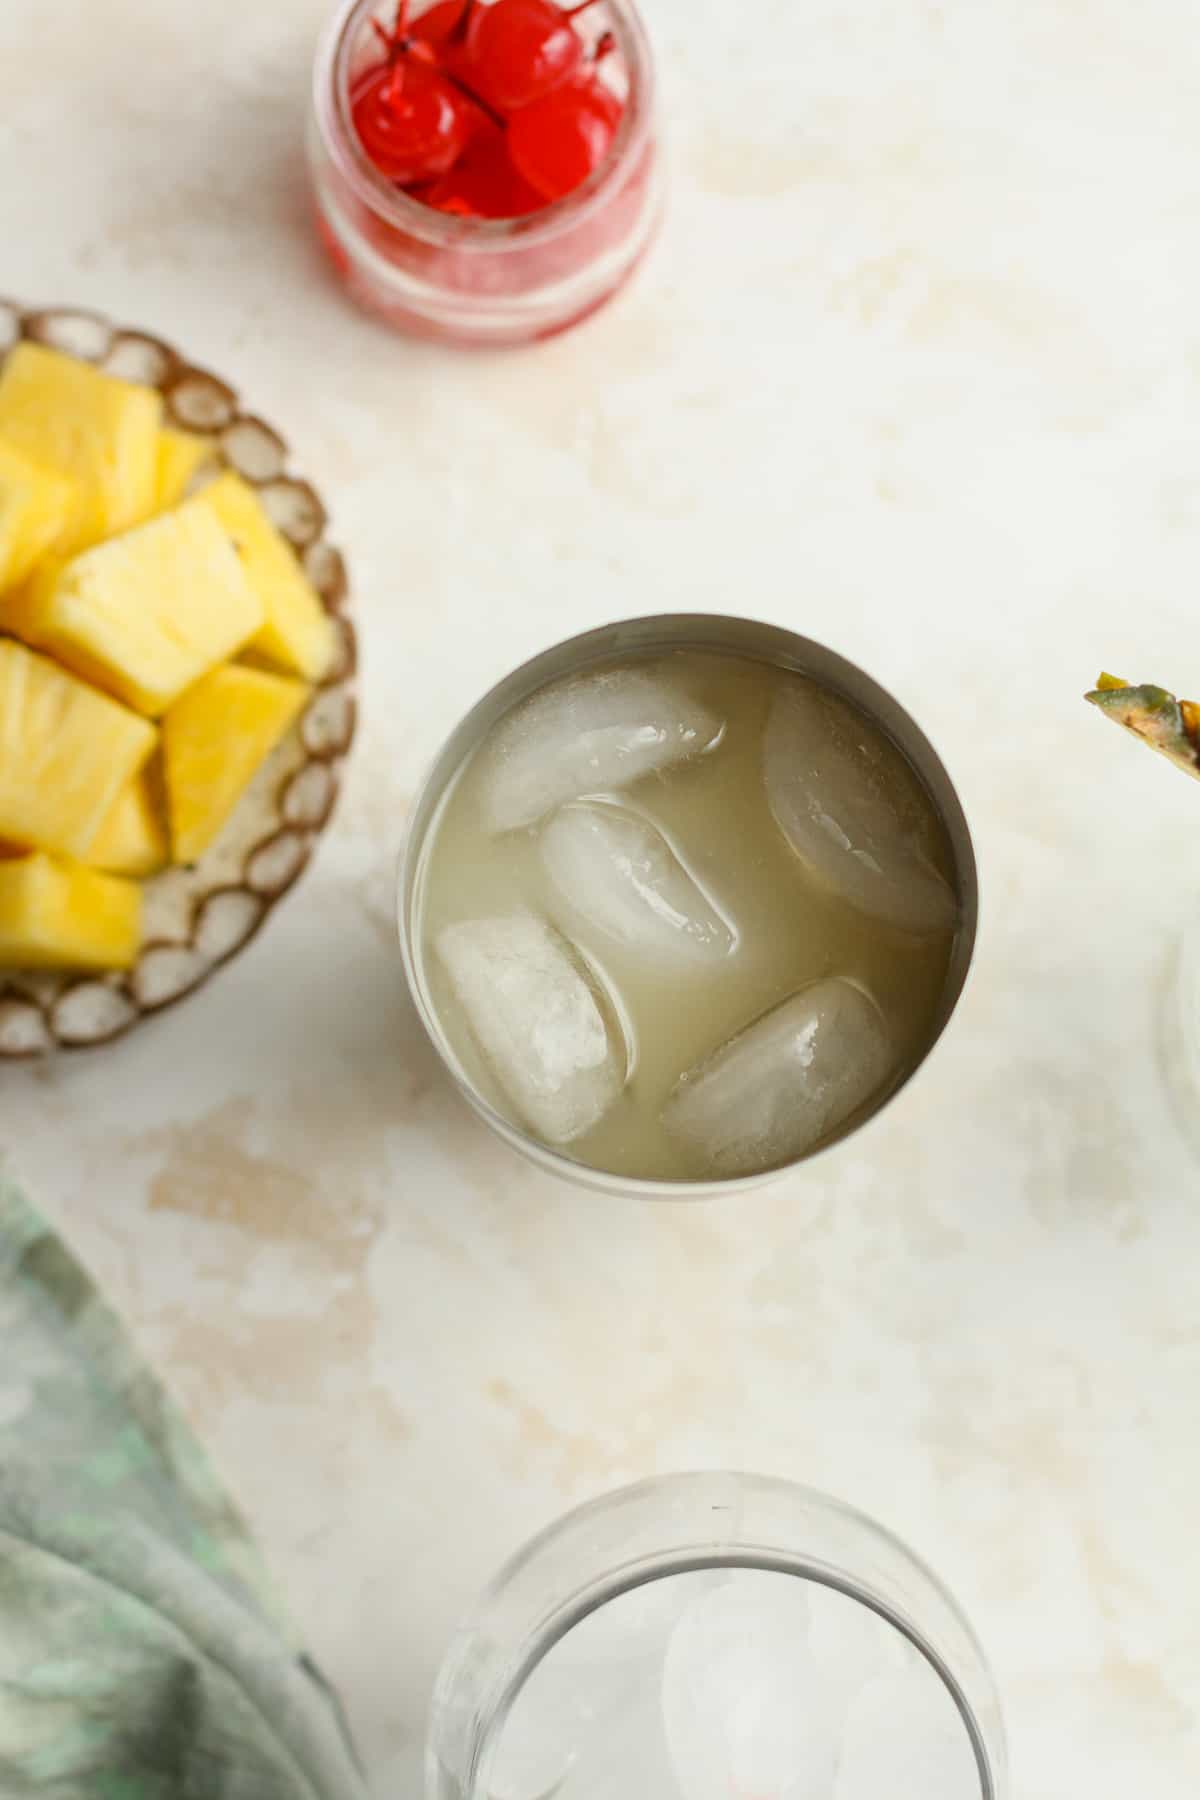 hawaiian mai tai recipe with pineapple juice